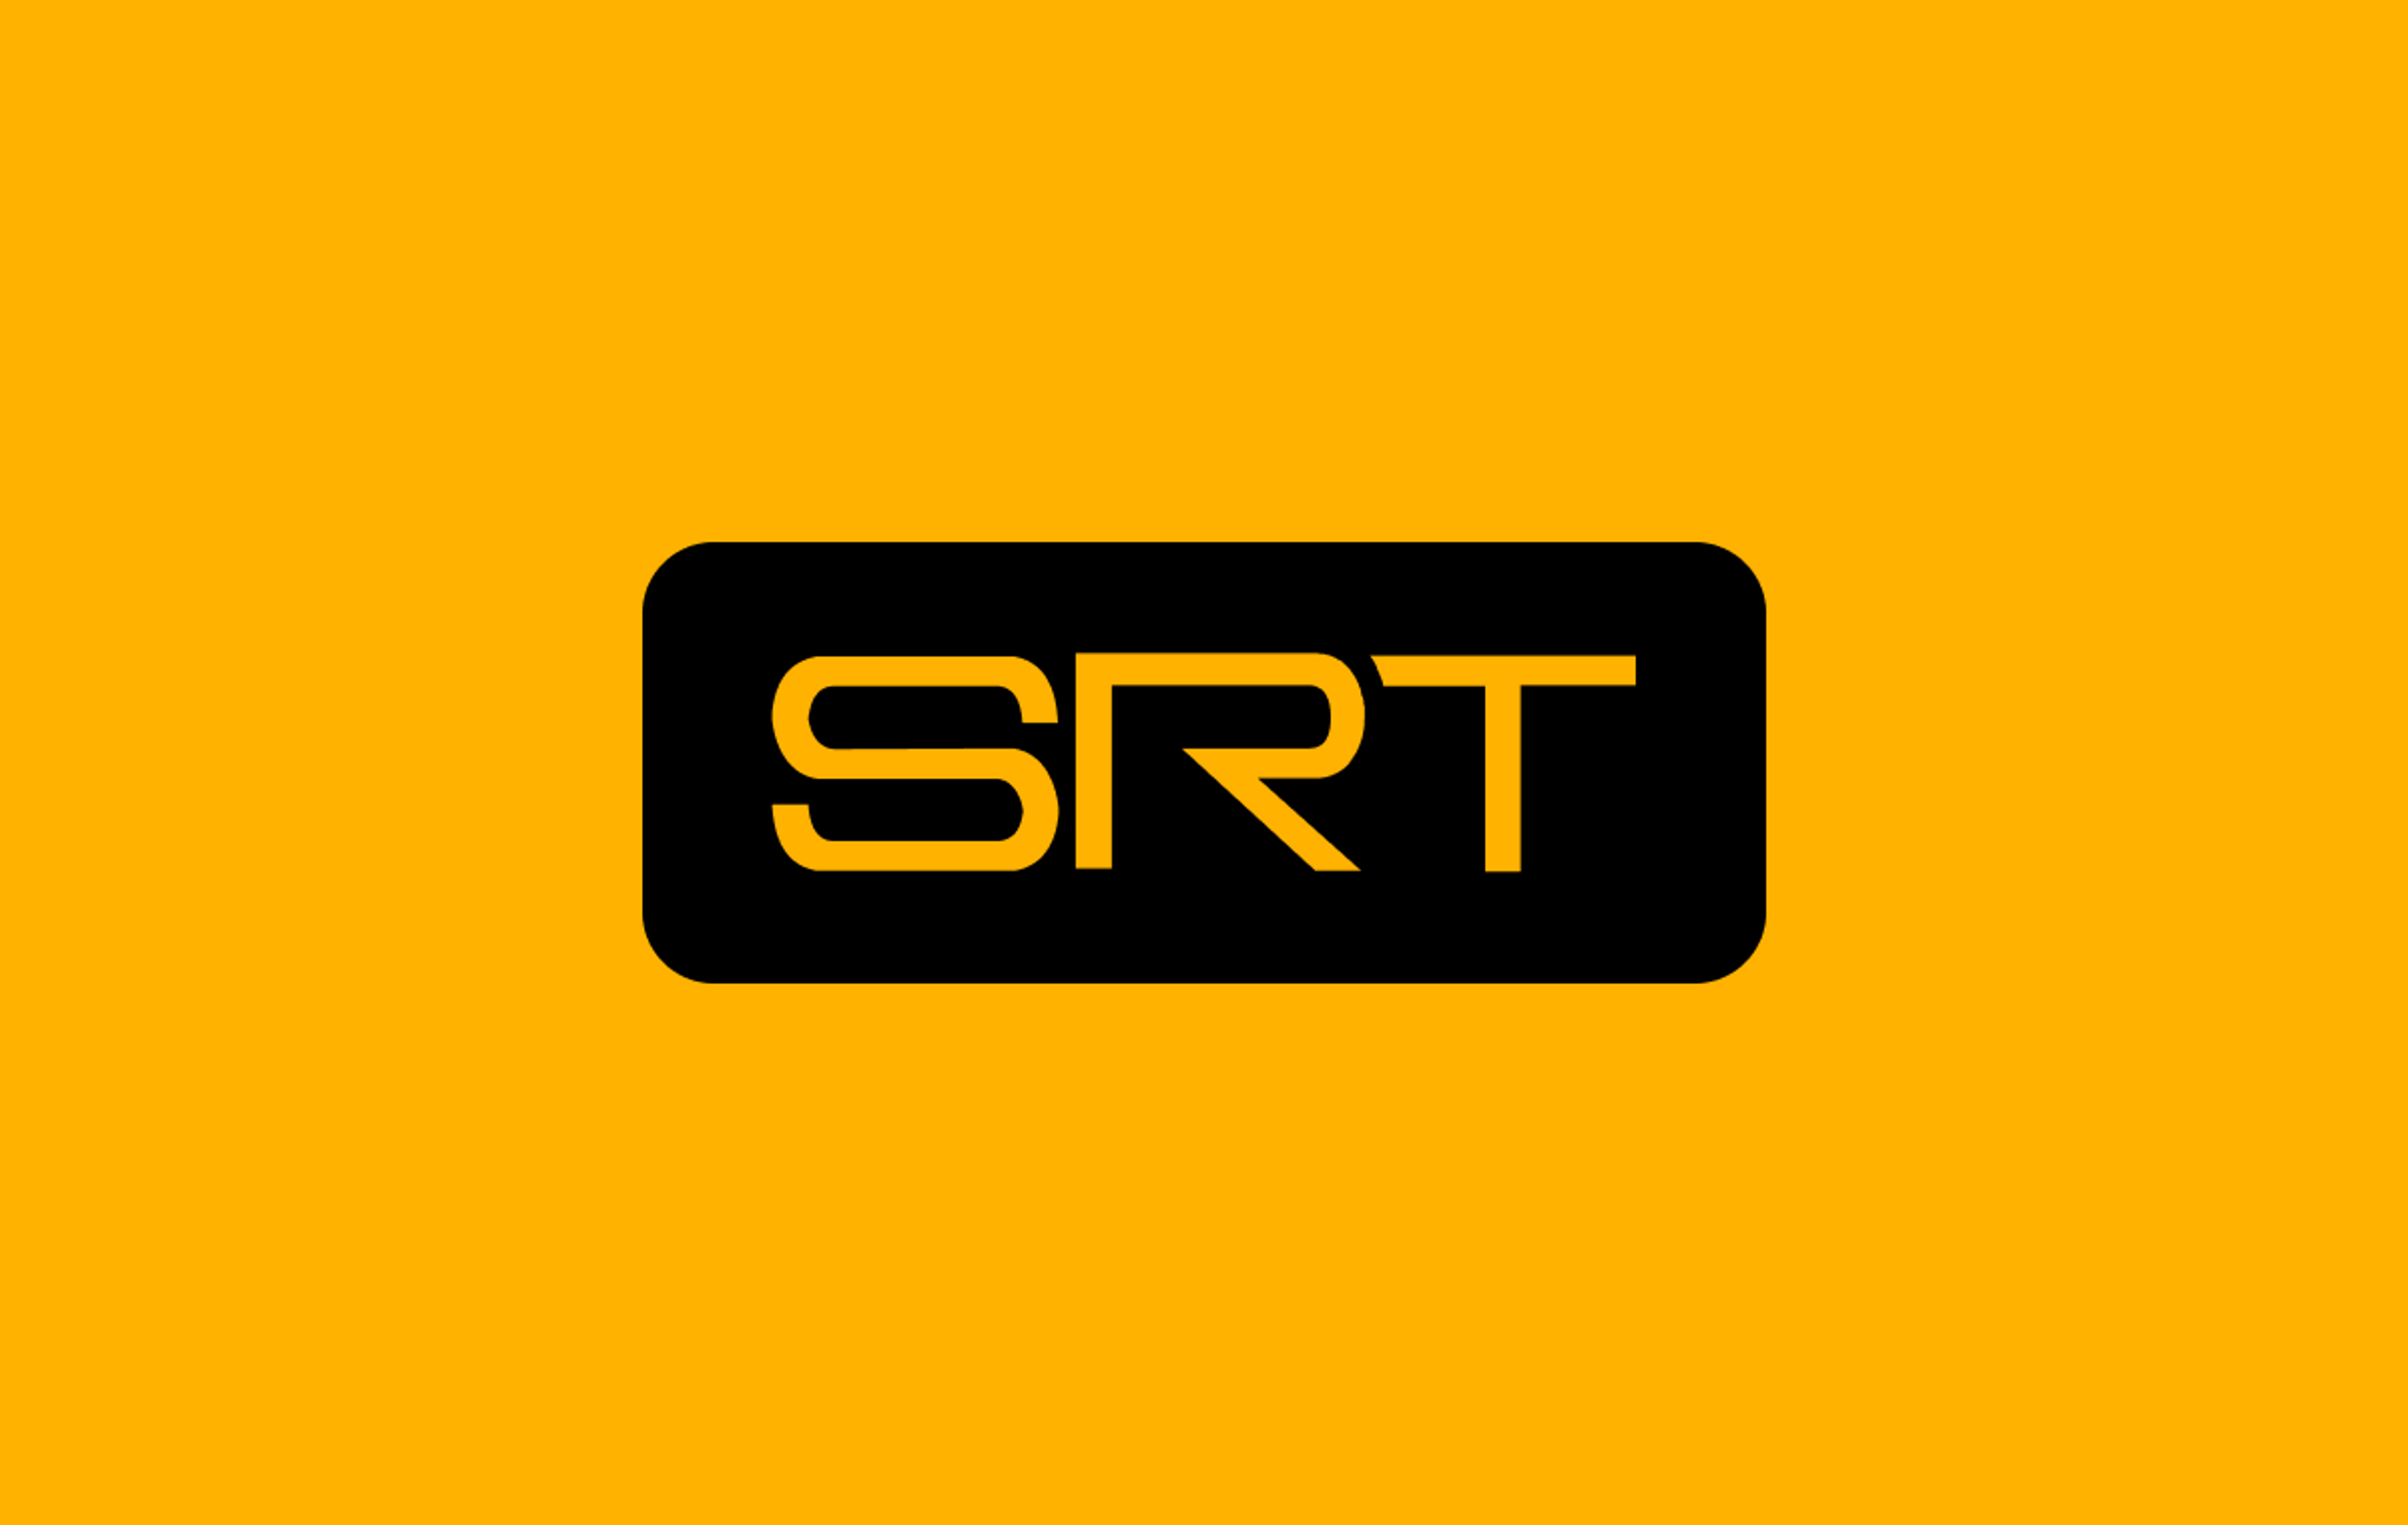 SRT logo on a yellow background